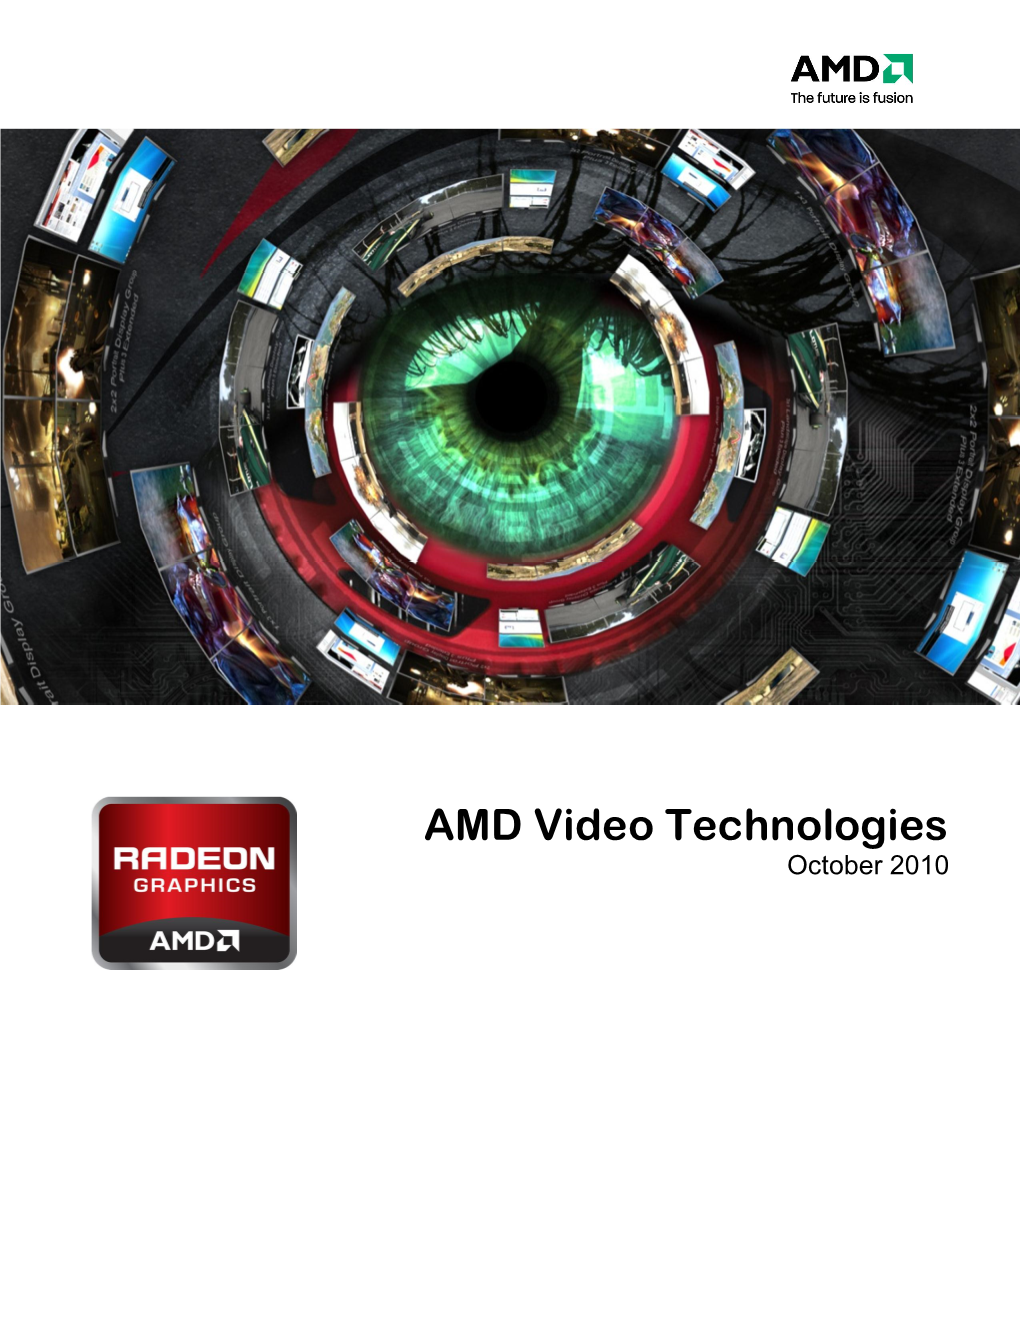 AMD Video Technologies October 2010